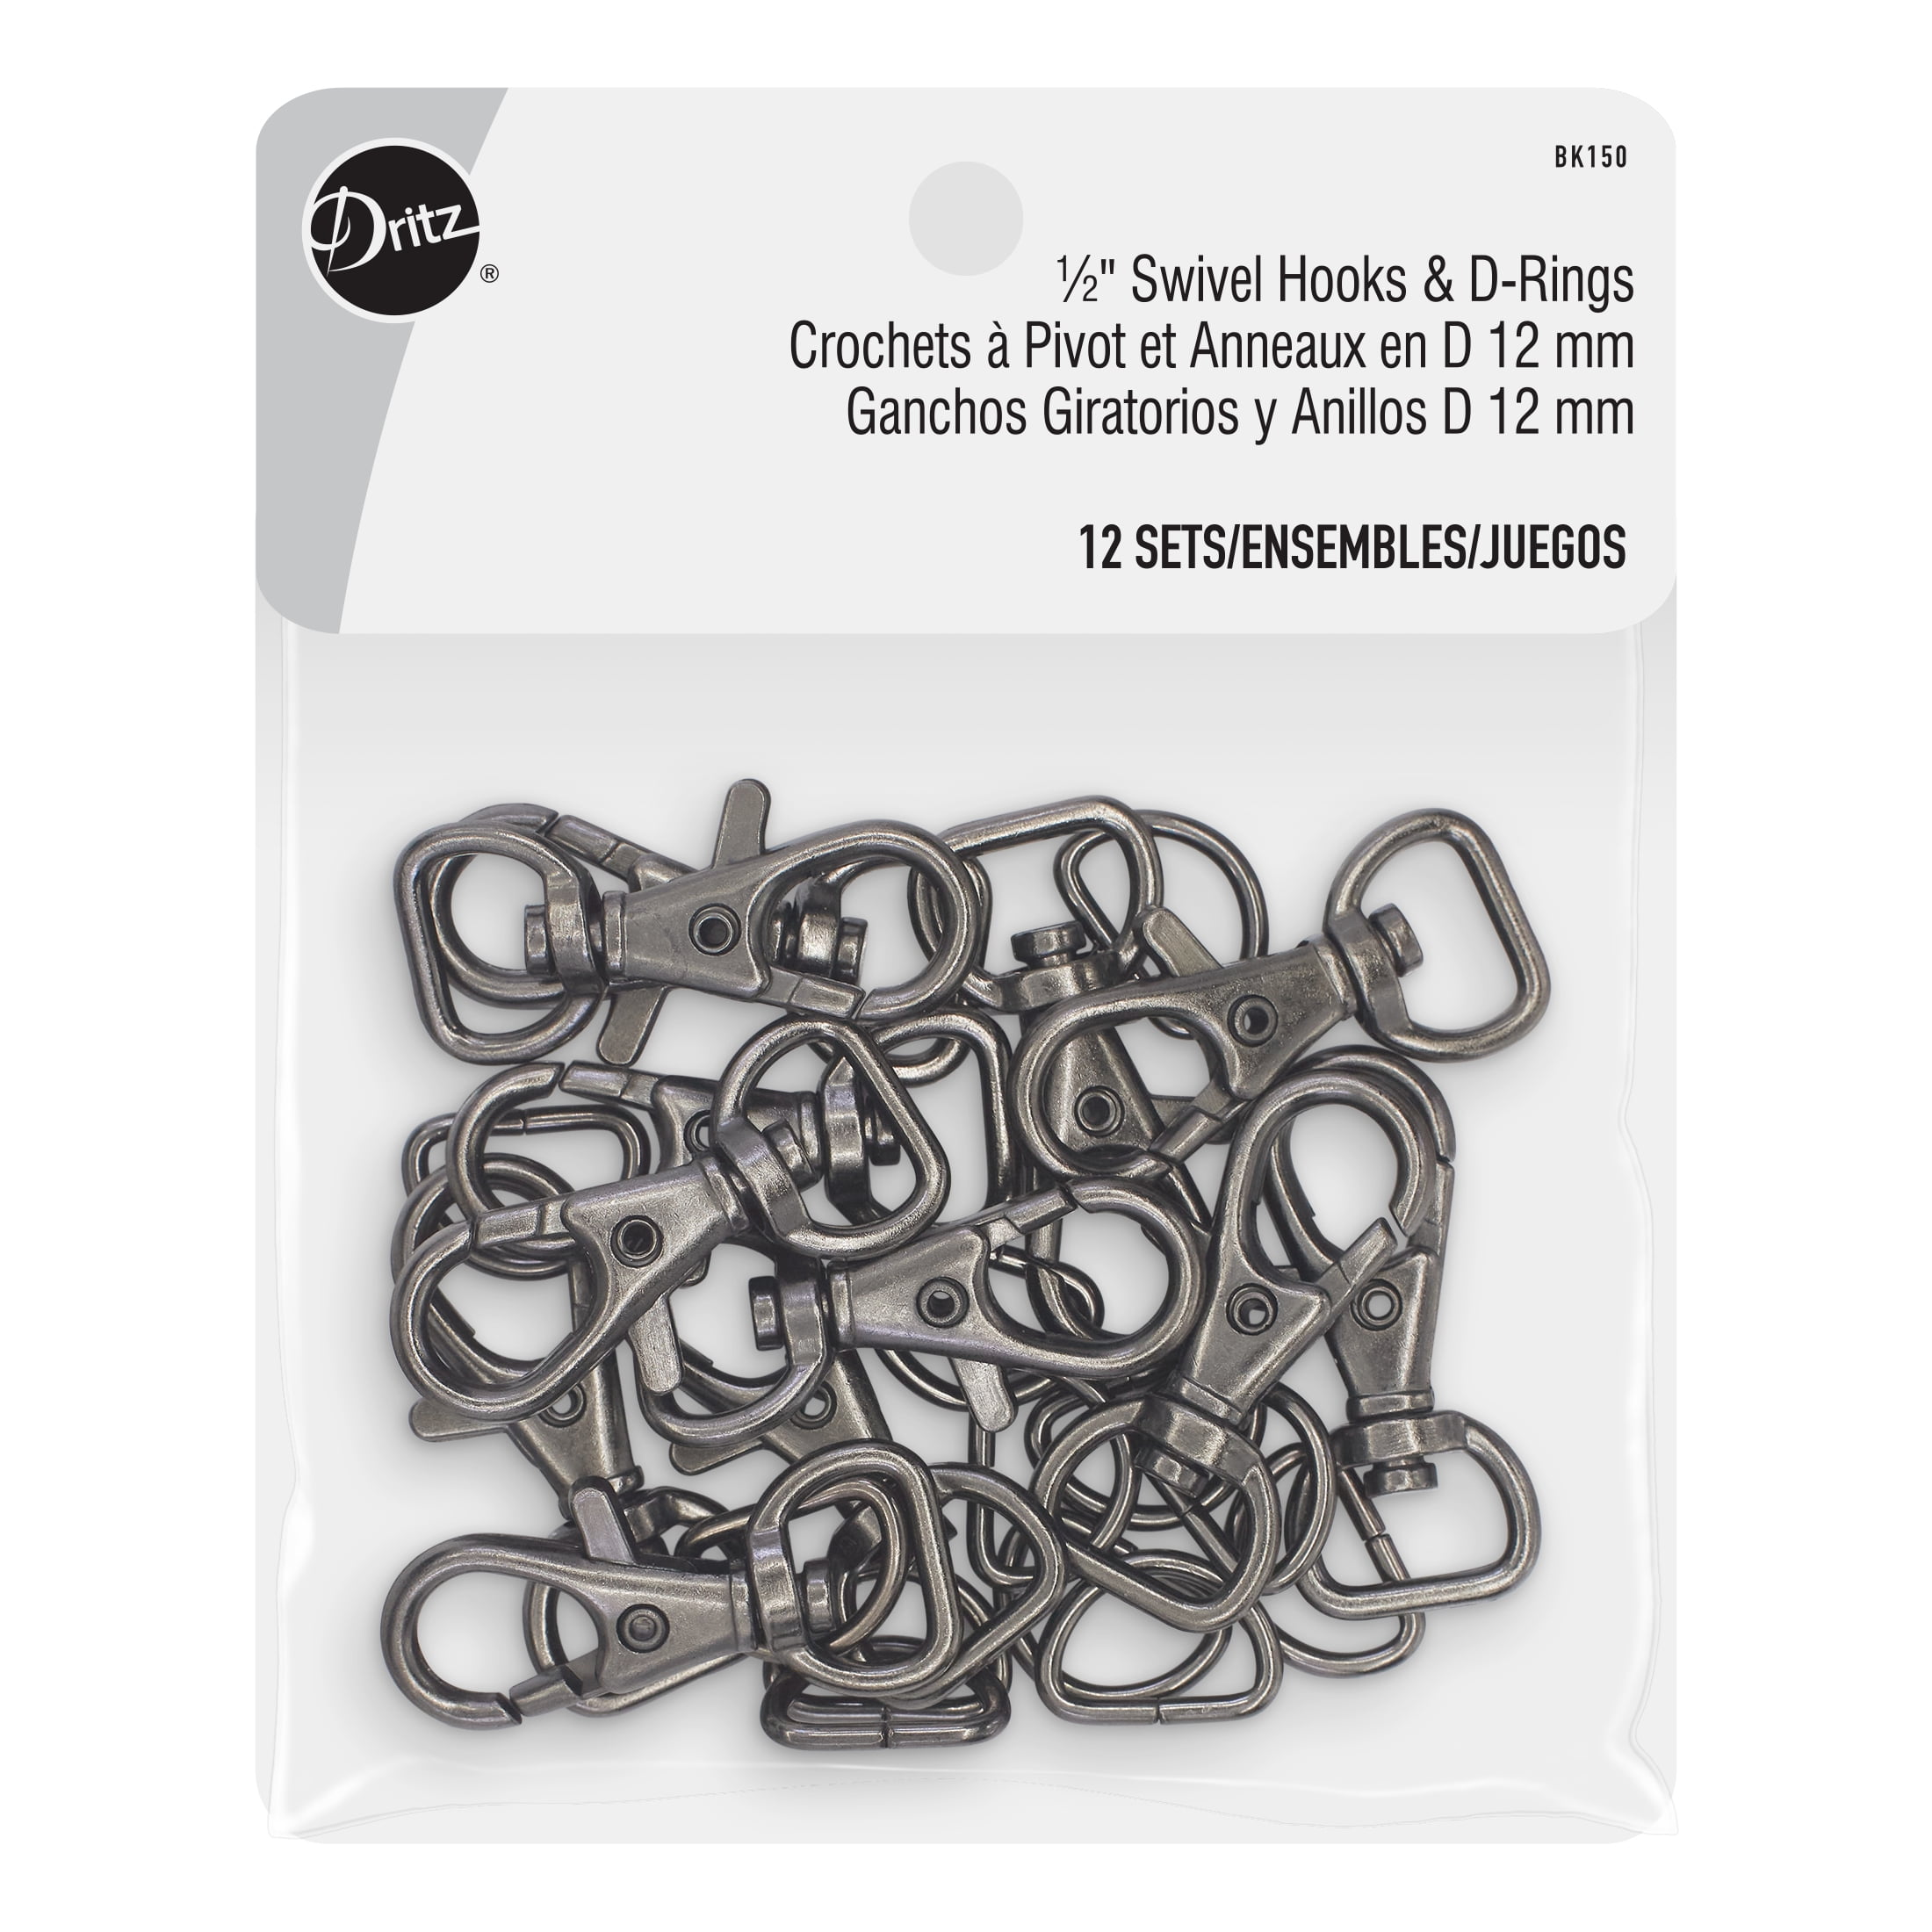 Dritz Metal D Rings 1-1/2 4/Pkg- Several Finishes